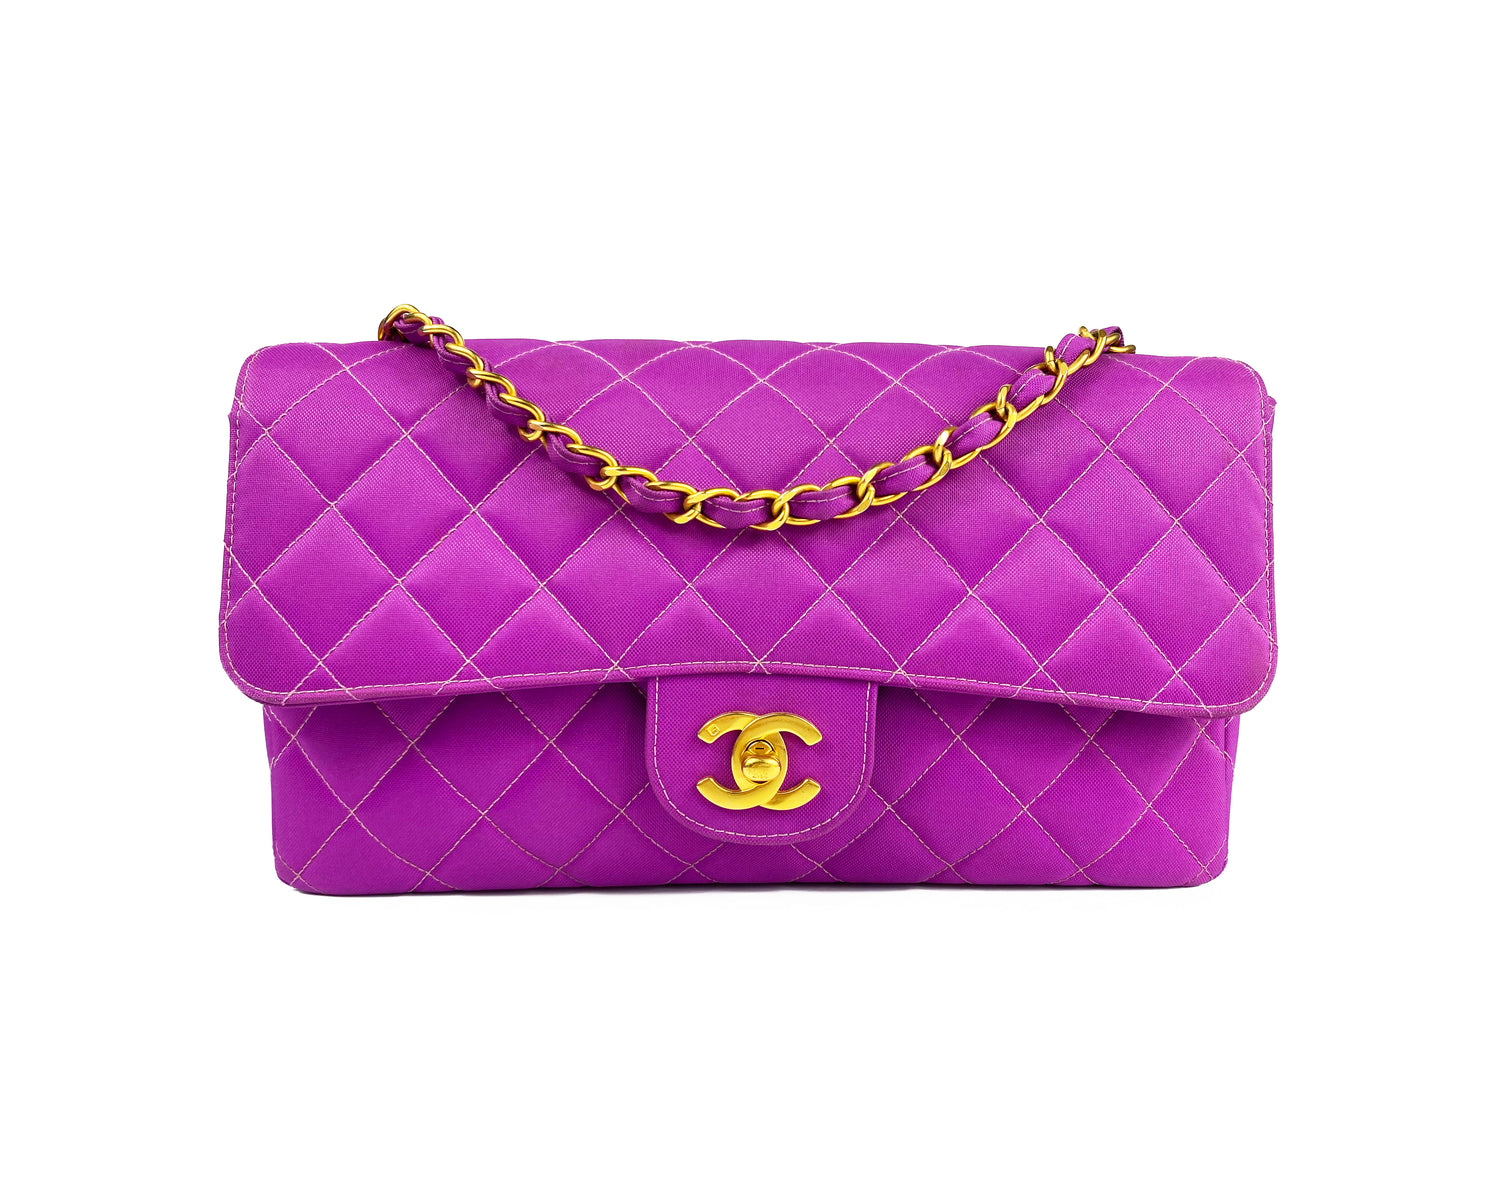 Chanel Purple Bag - 88 For Sale on 1stDibs  purple chanel bag, violet  chanel bag, chanel violet bag